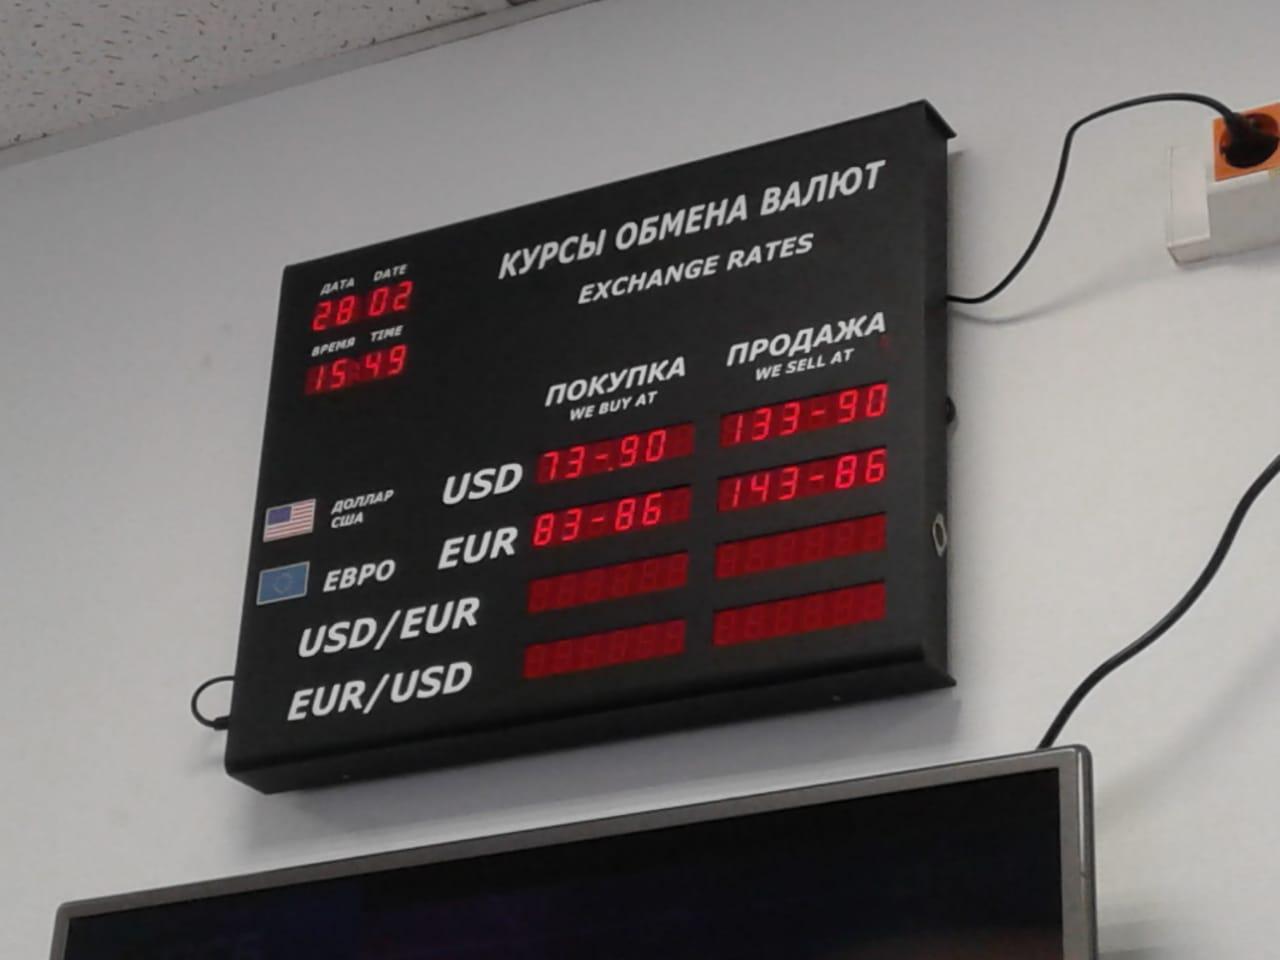 Фото В Новосибирске курс евро достиг 195 рублей 28 февраля 23